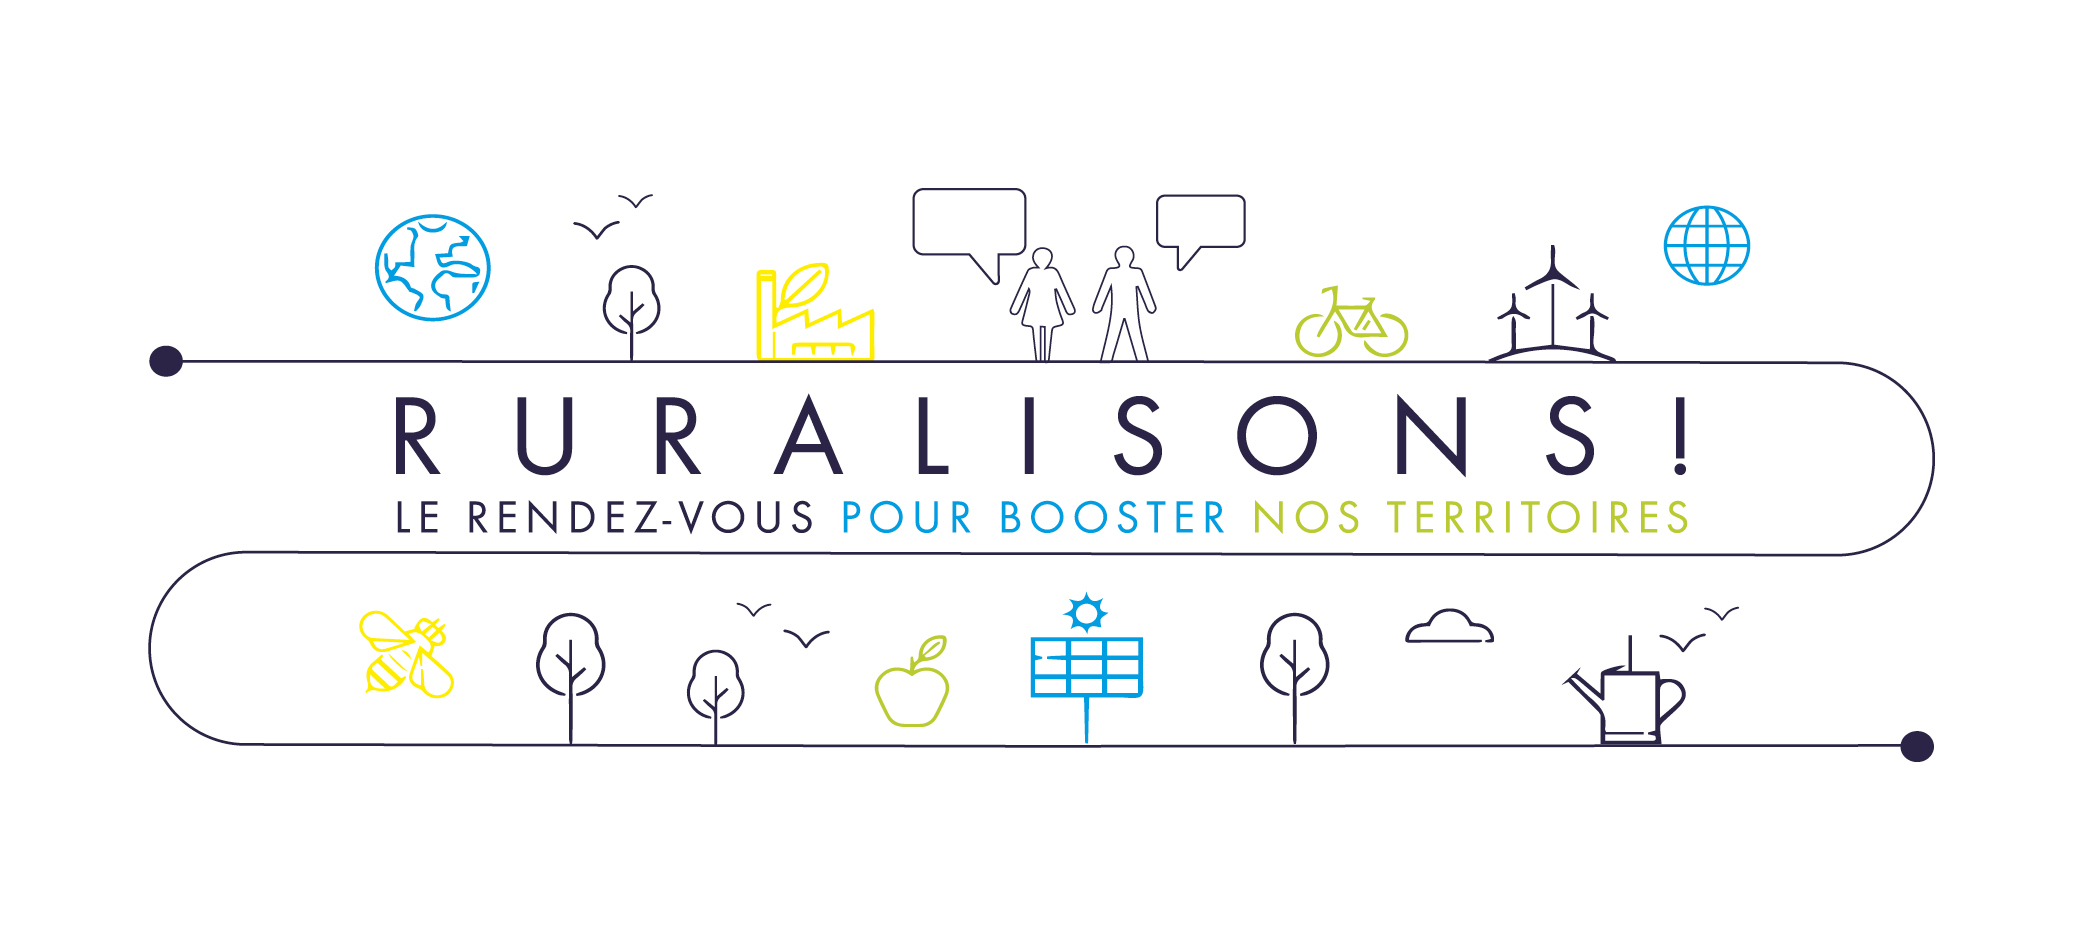 Ruralisons_logo.jpg